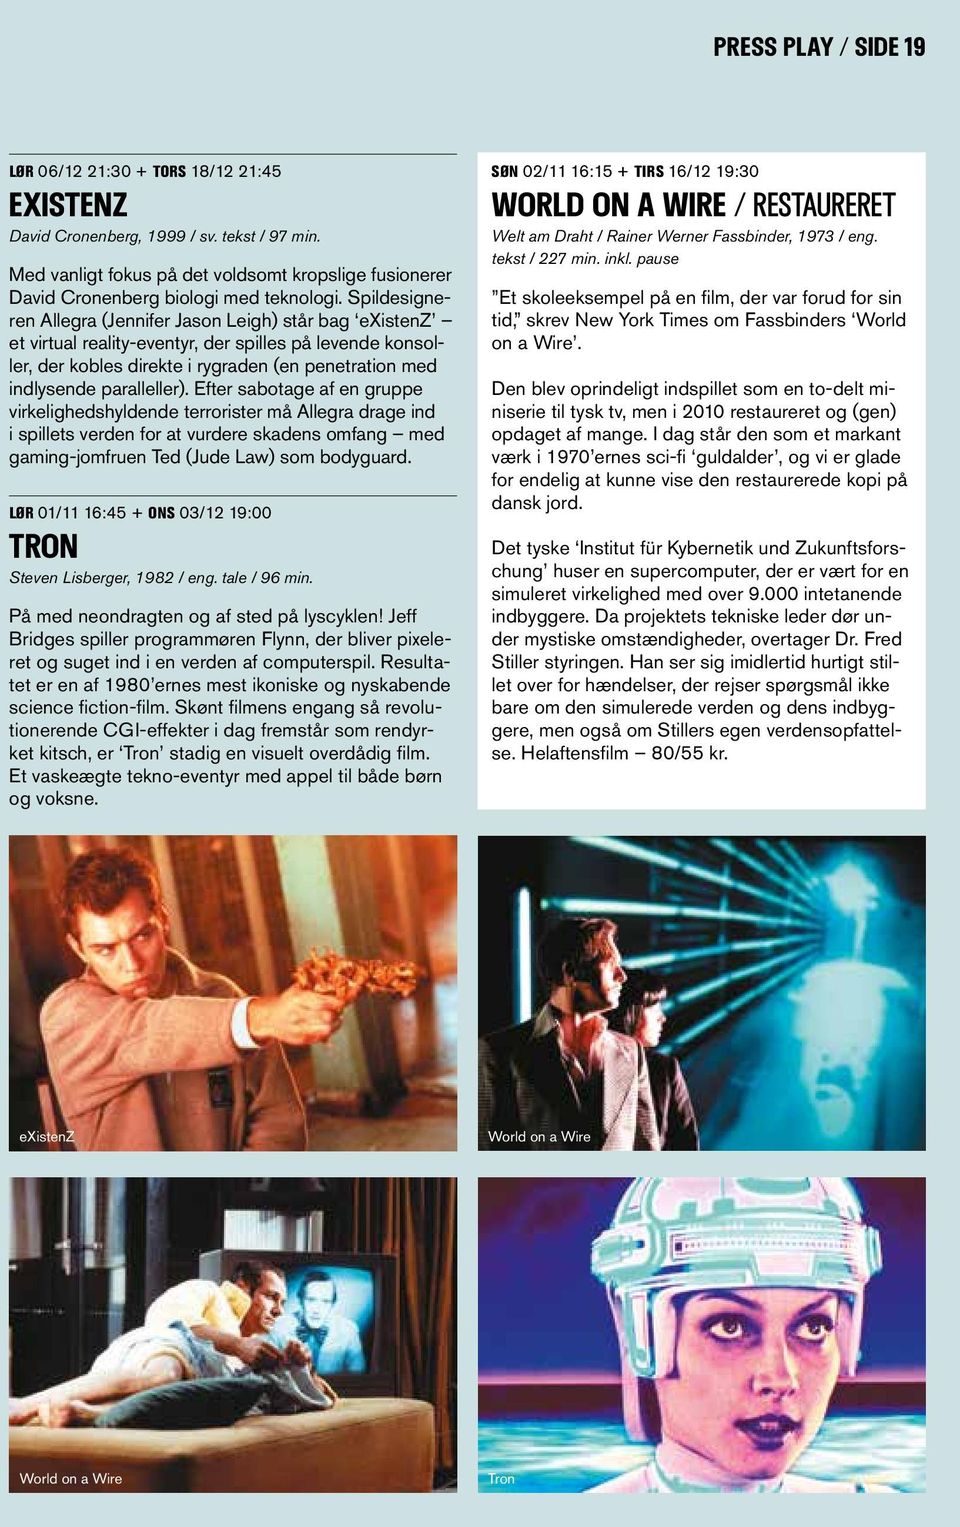 Spildesigneren Allegra (Jennifer Jason Leigh) står bag existenz et virtual reality-eventyr, der spilles på levende konsoller, der kobles direkte i rygraden (en penetration med indlysende paralleller).